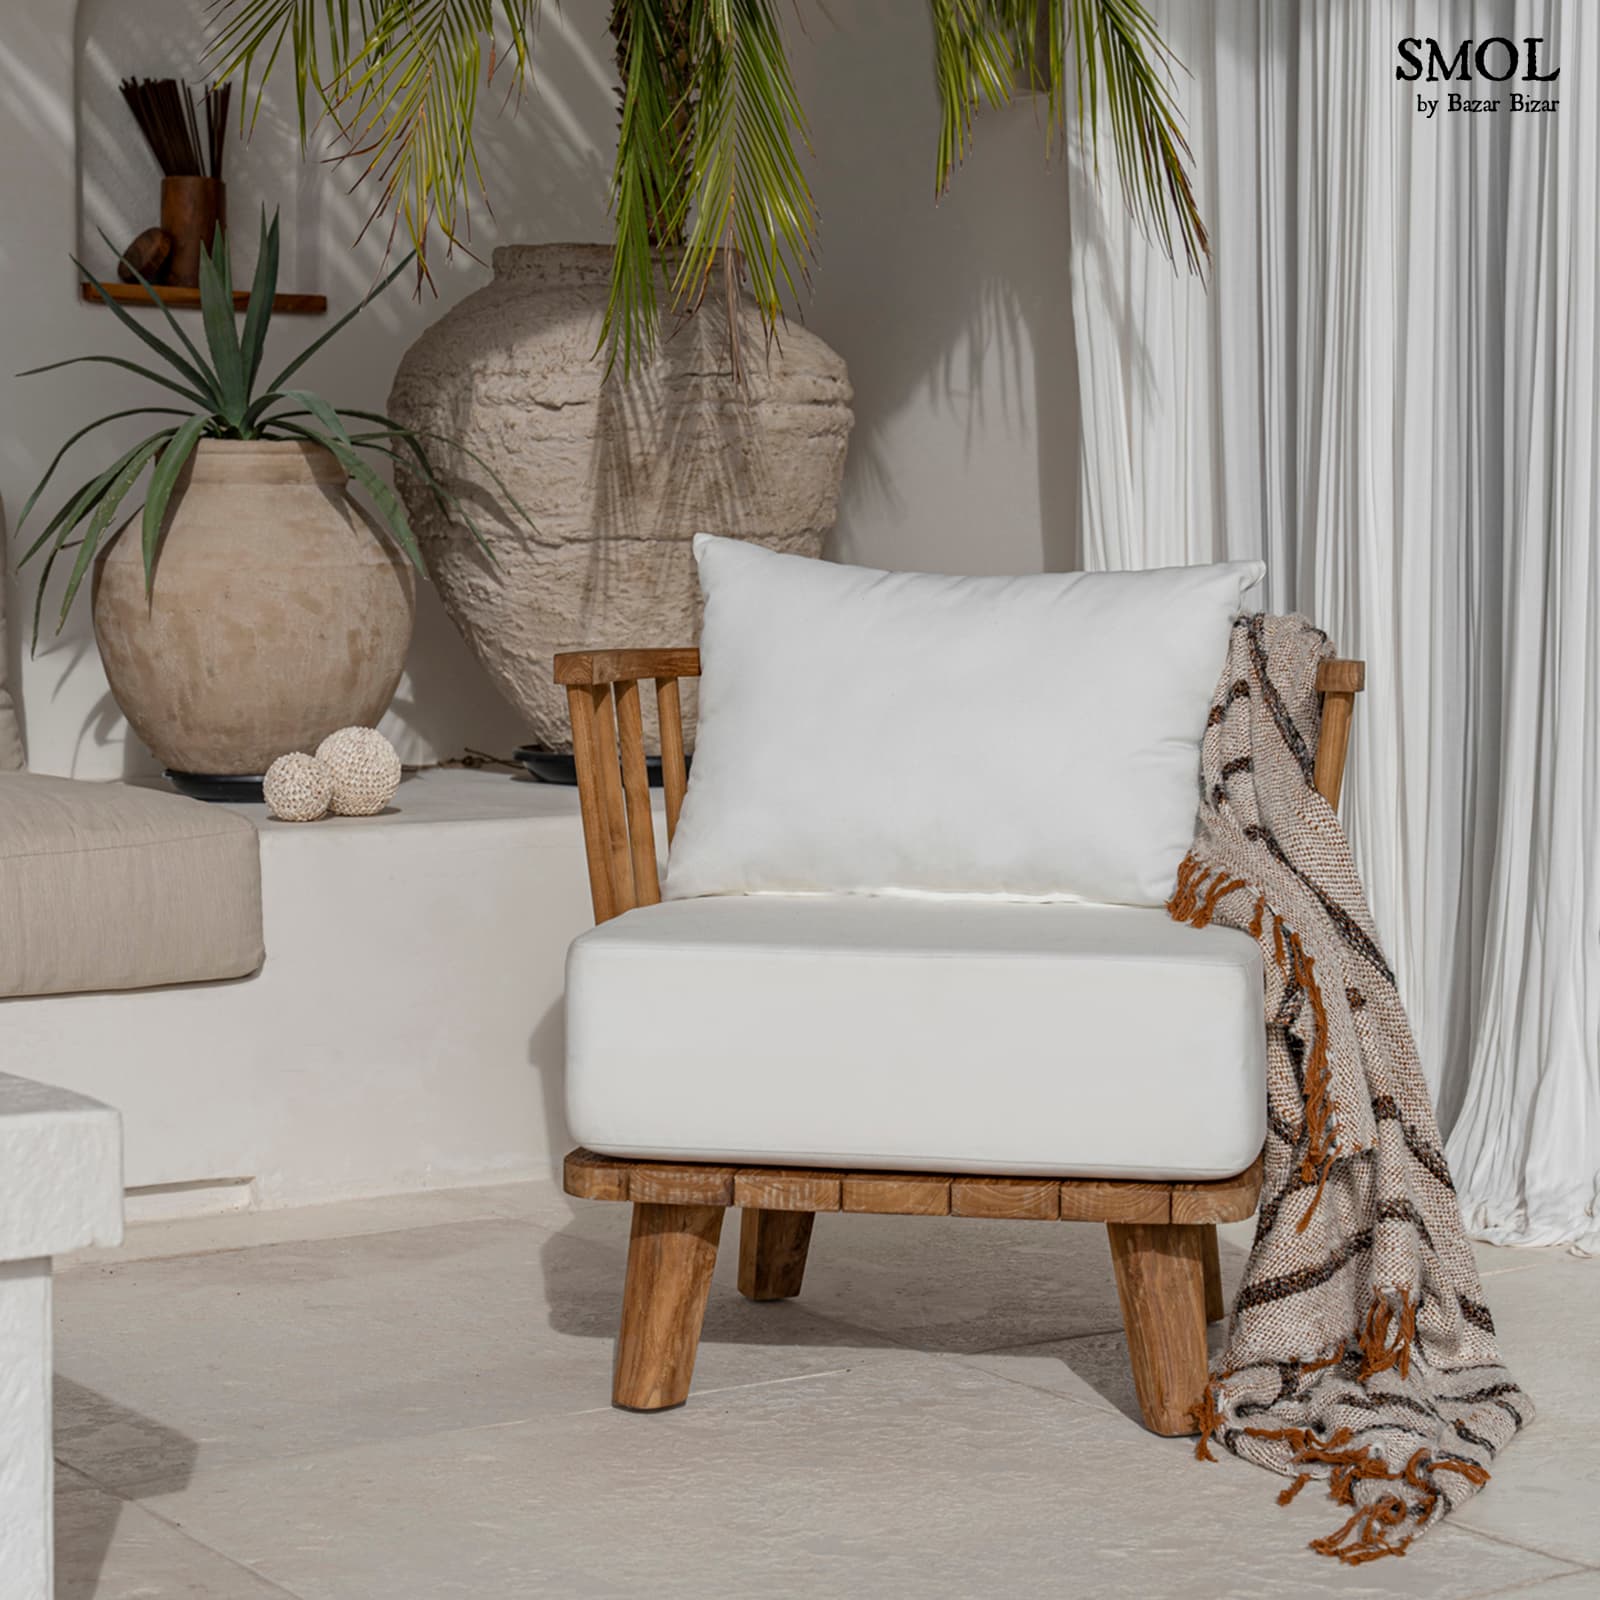 smol.hu - BOMA, bohém fehér takaró, 170x130 cm fotellel, teraszon